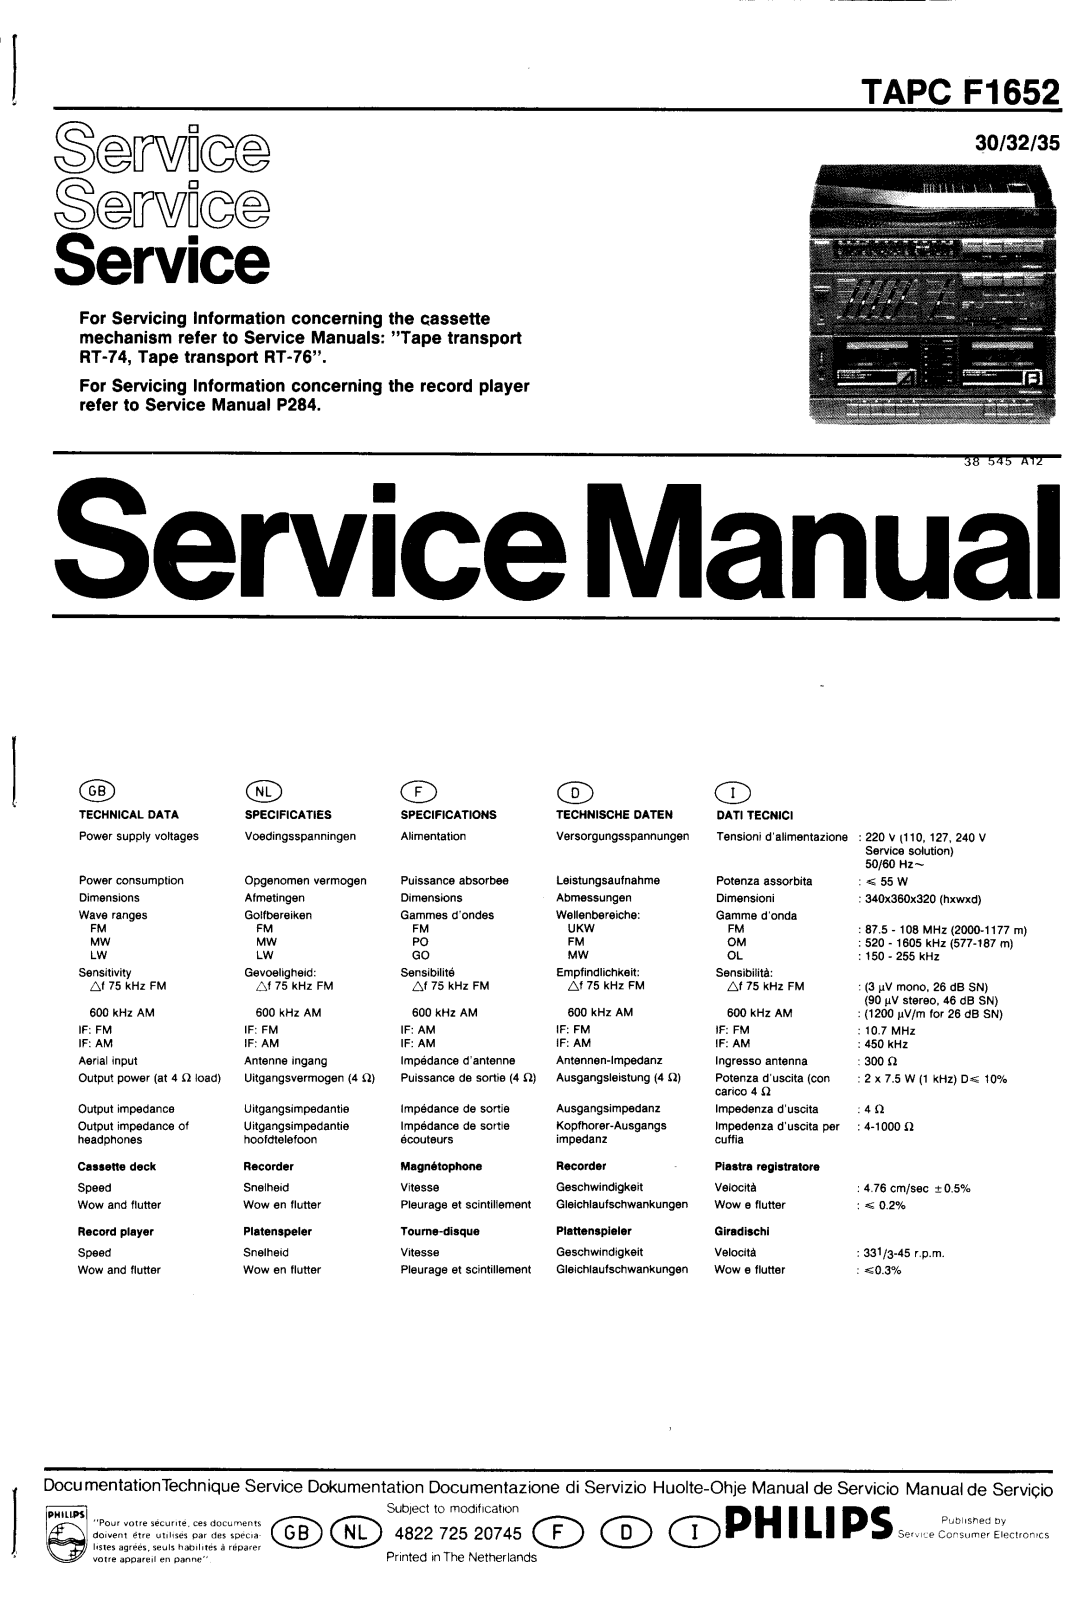 Philips TAPCF-1652 Service Manual